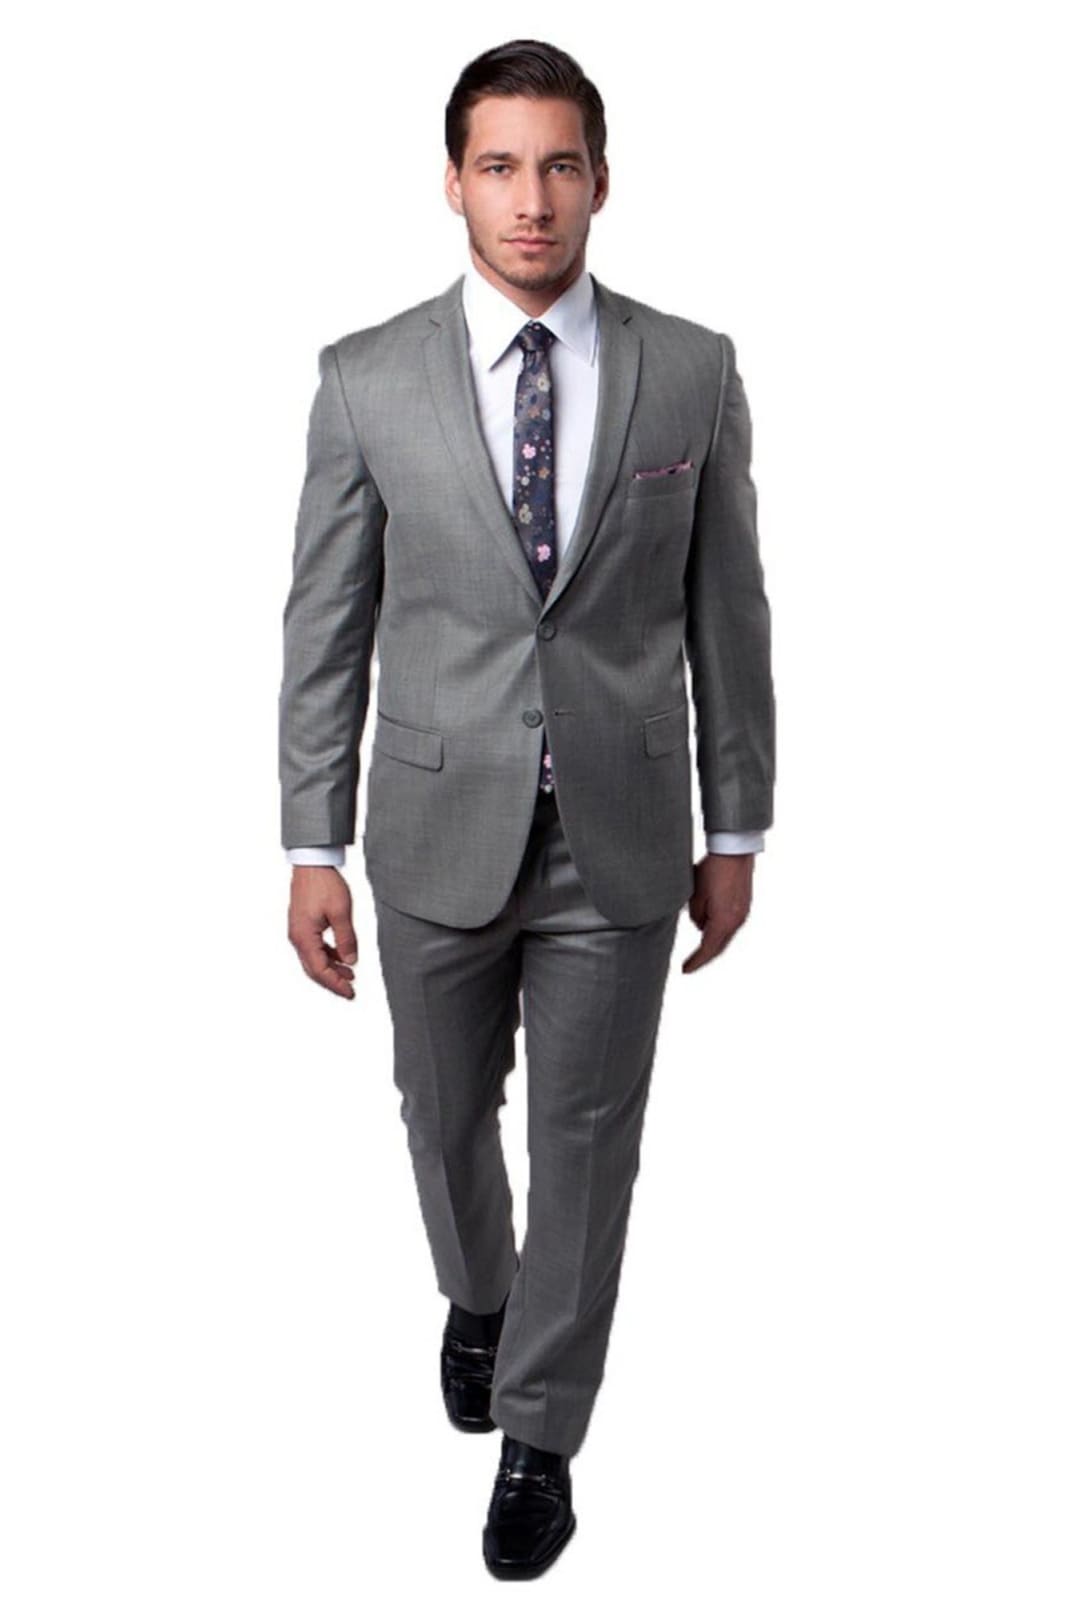 Mens Two Piece Ultra Slim Fit Sharkskin Suit - LA181SSA - EARTH TAN - Mens Suits LA Merchandise